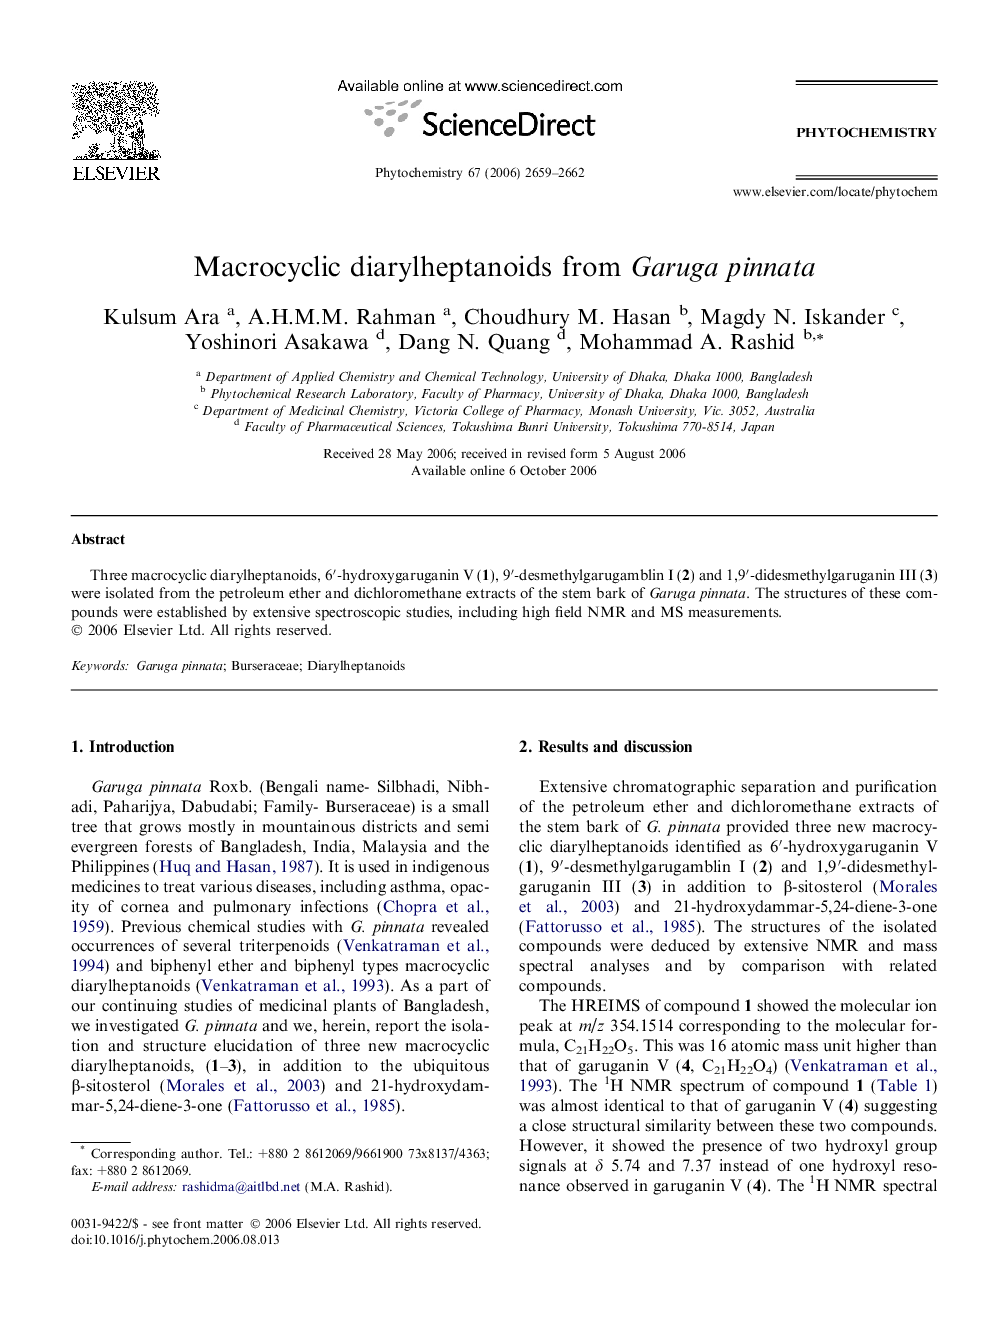 Macrocyclic diarylheptanoids from Garuga pinnata